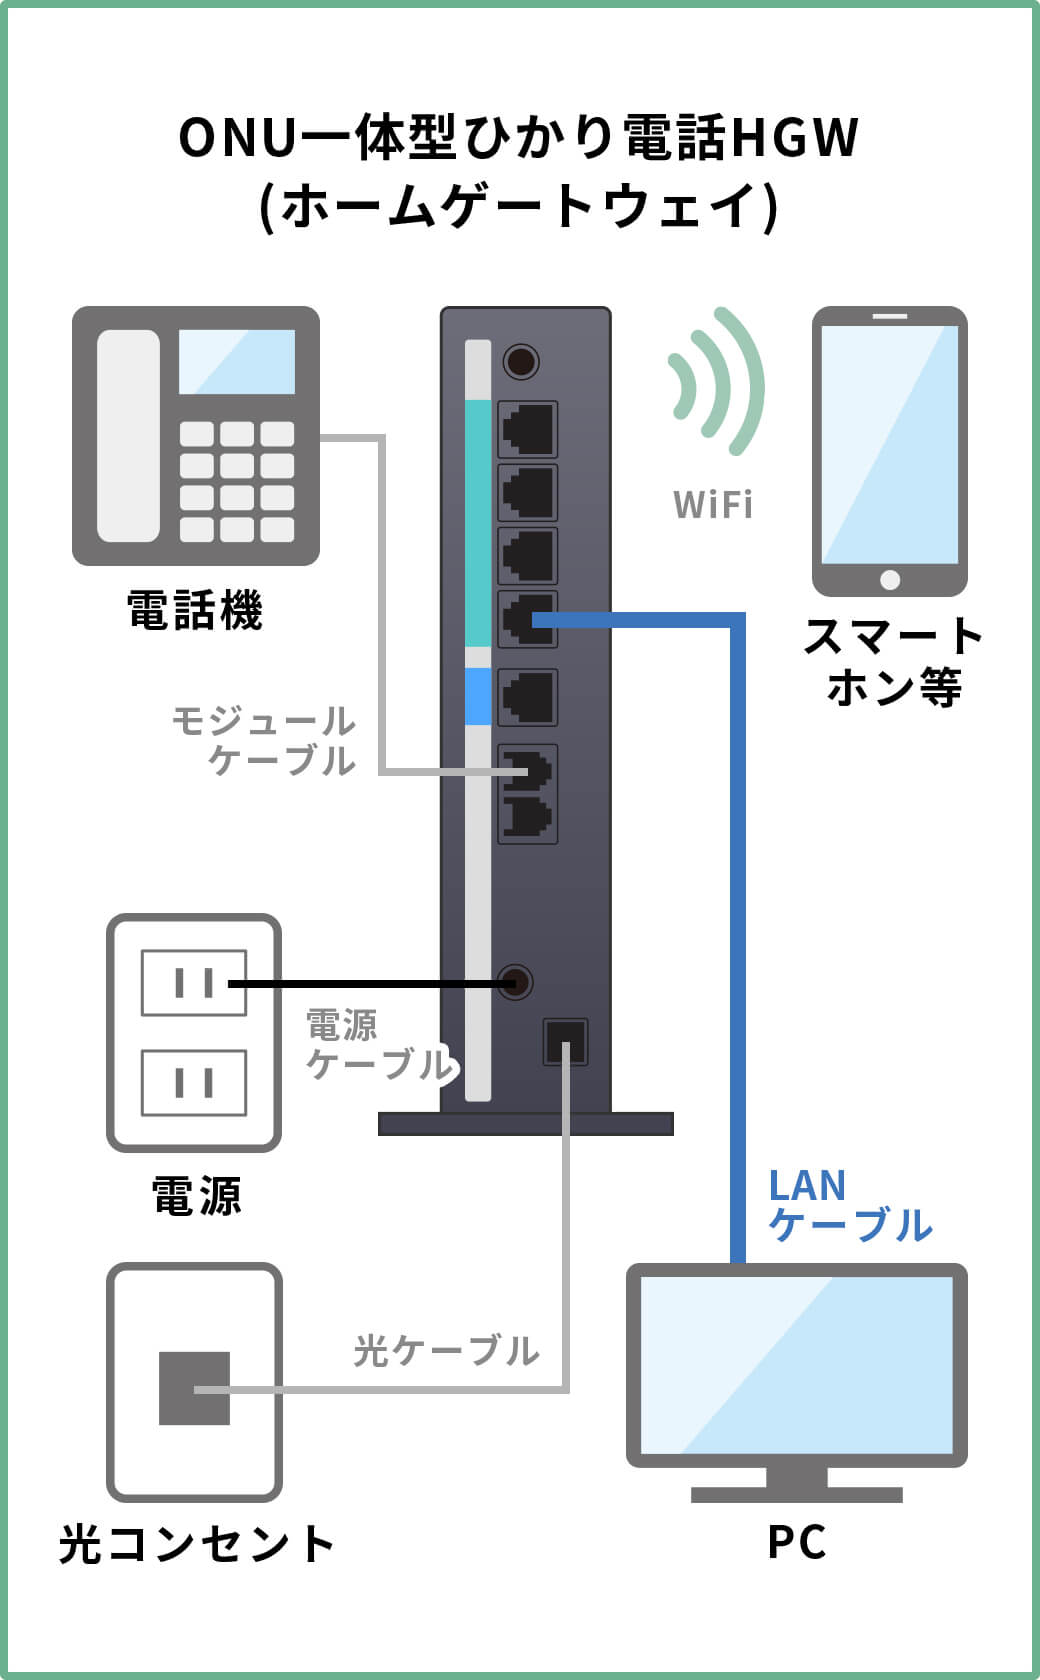 ONU一体型ひかり電話HGW（ホームゲートウェイ）に、4つのケーブル（電話機のモジュールケーブル、電源ケーブル、光コンセントの光ケーブル、パソコンのLANケーブル）と、スマートホンやモバイルへWi-Fiで繋がっている図